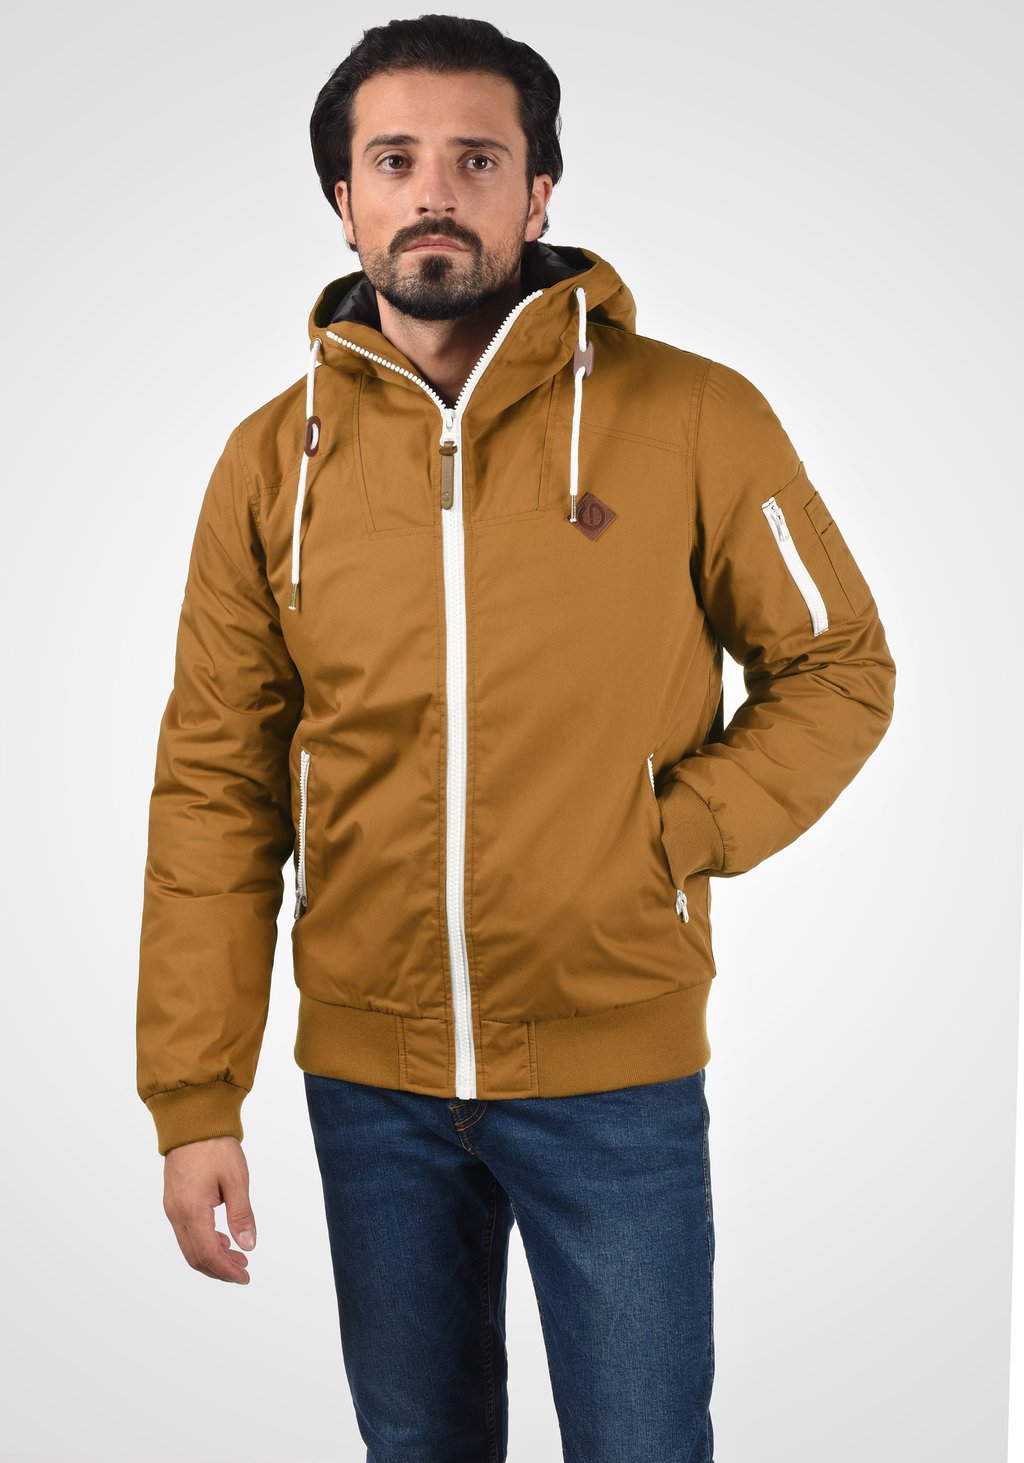 Демисезонная куртка Solid, коричневый куртка befree демисезонная размер s коричневый